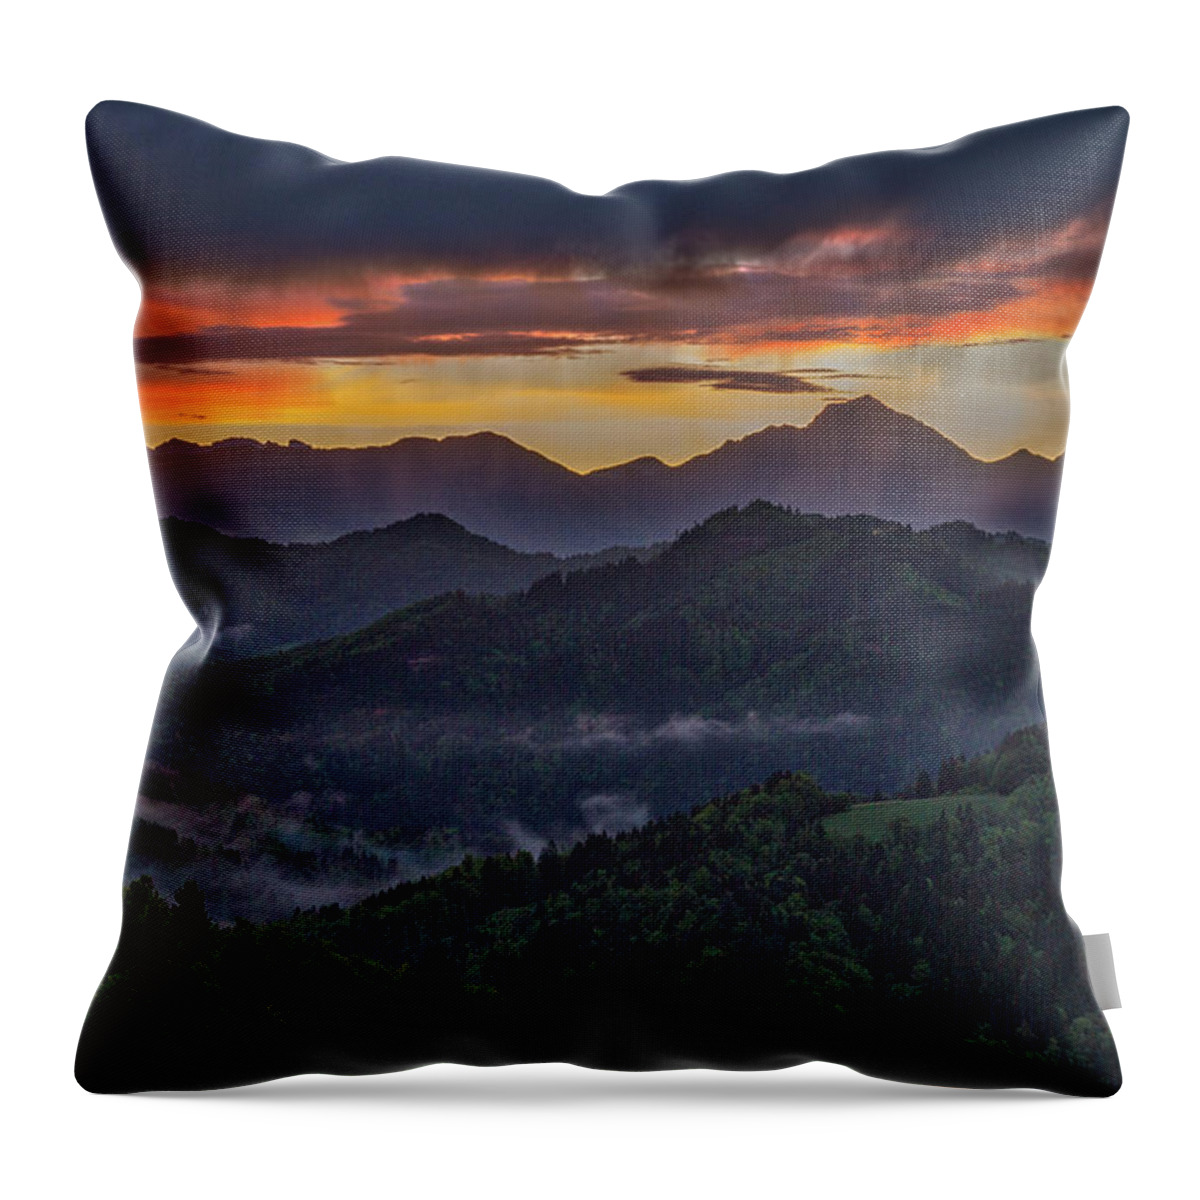 Slovenia Throw Pillow featuring the photograph Slovenia Countryside Dawn by Stuart Litoff